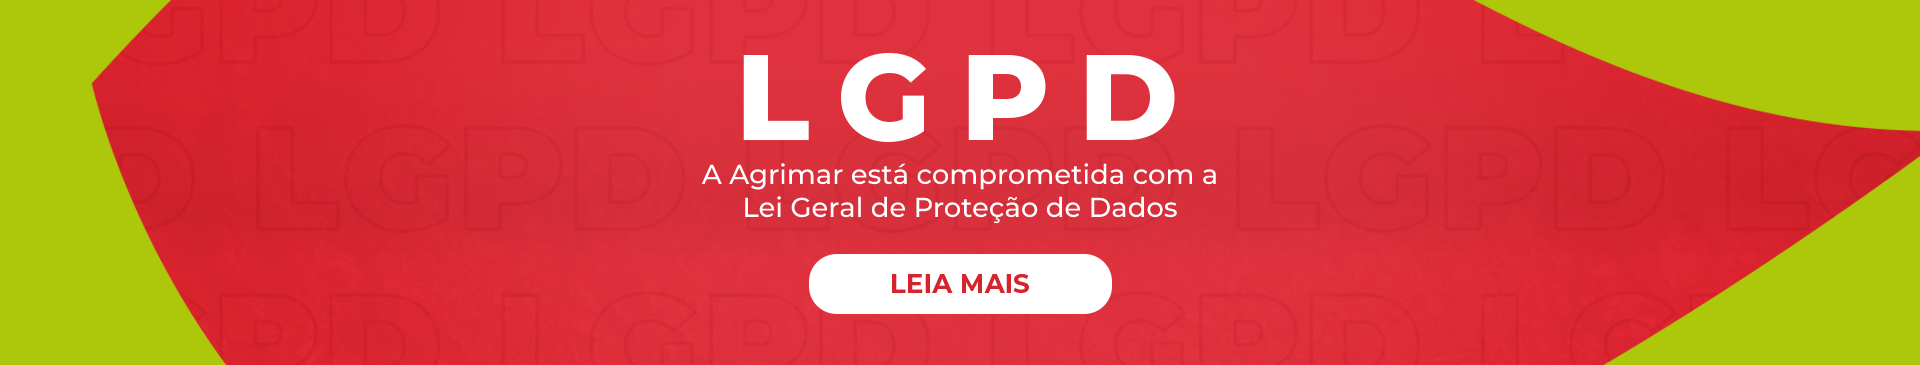 Banner LGPD